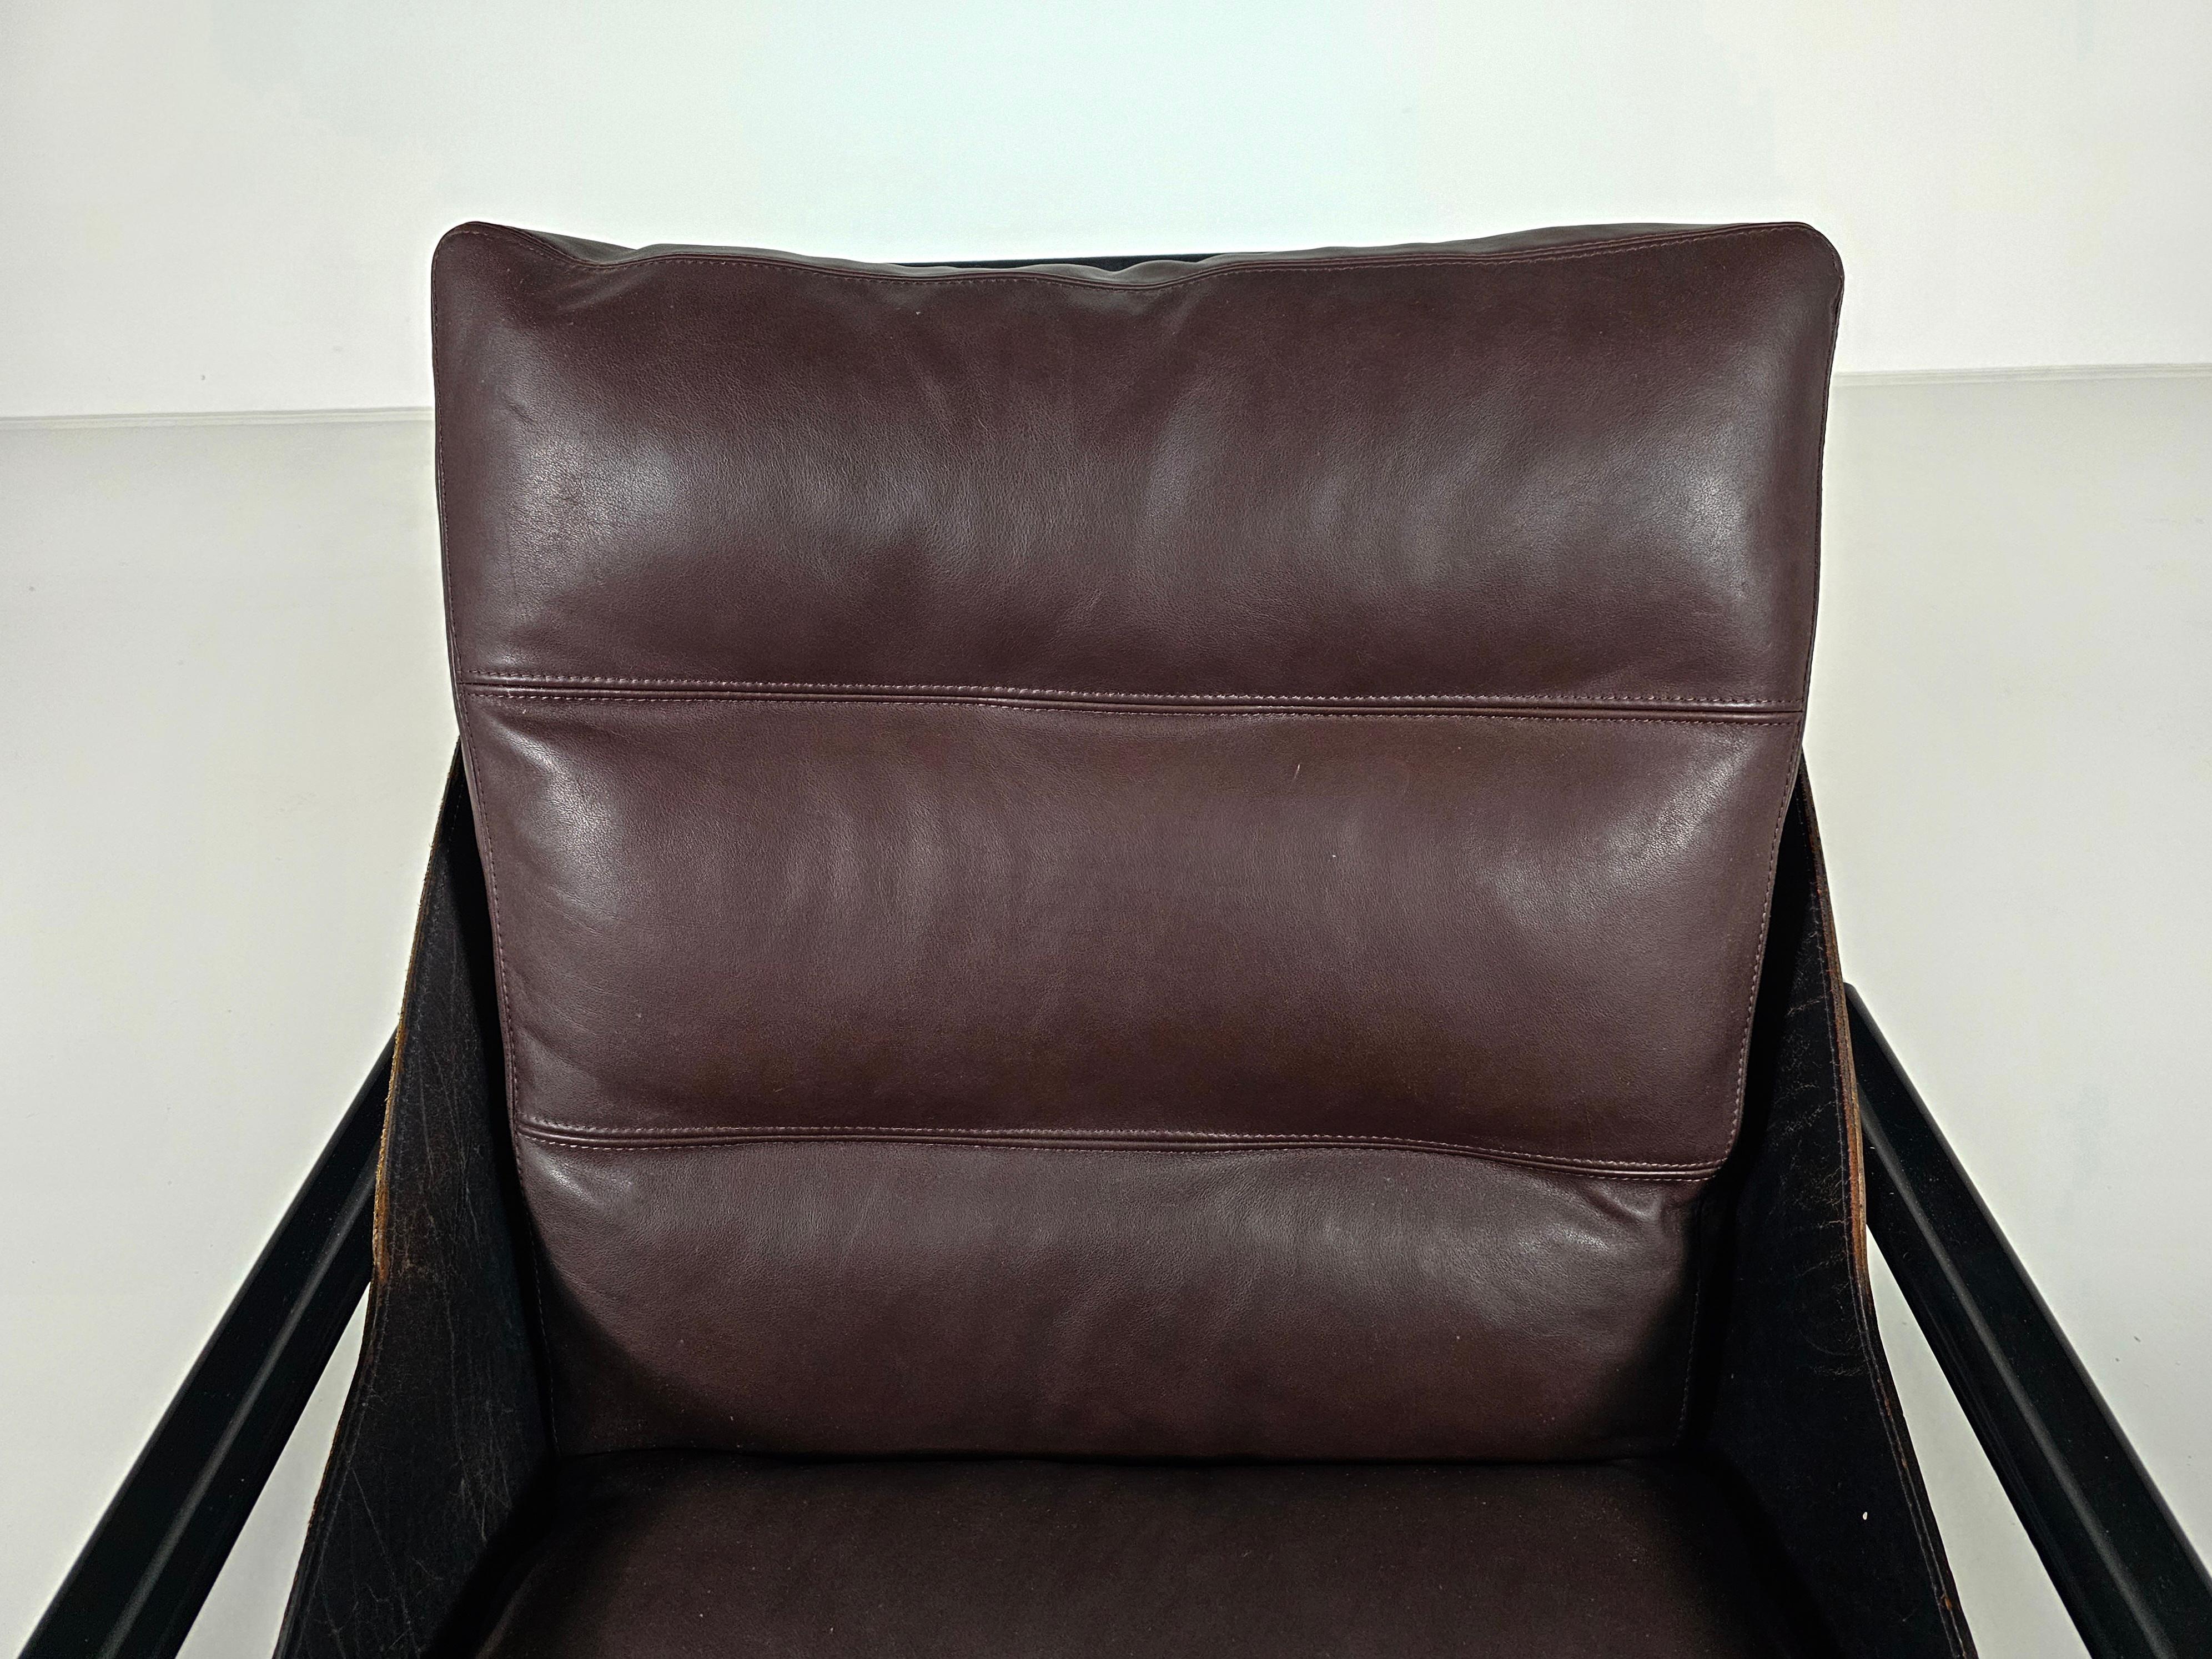  Marco Zanuso Maggiolina lounge chairs in brown and black leather, Zanotta, 1950 For Sale 2